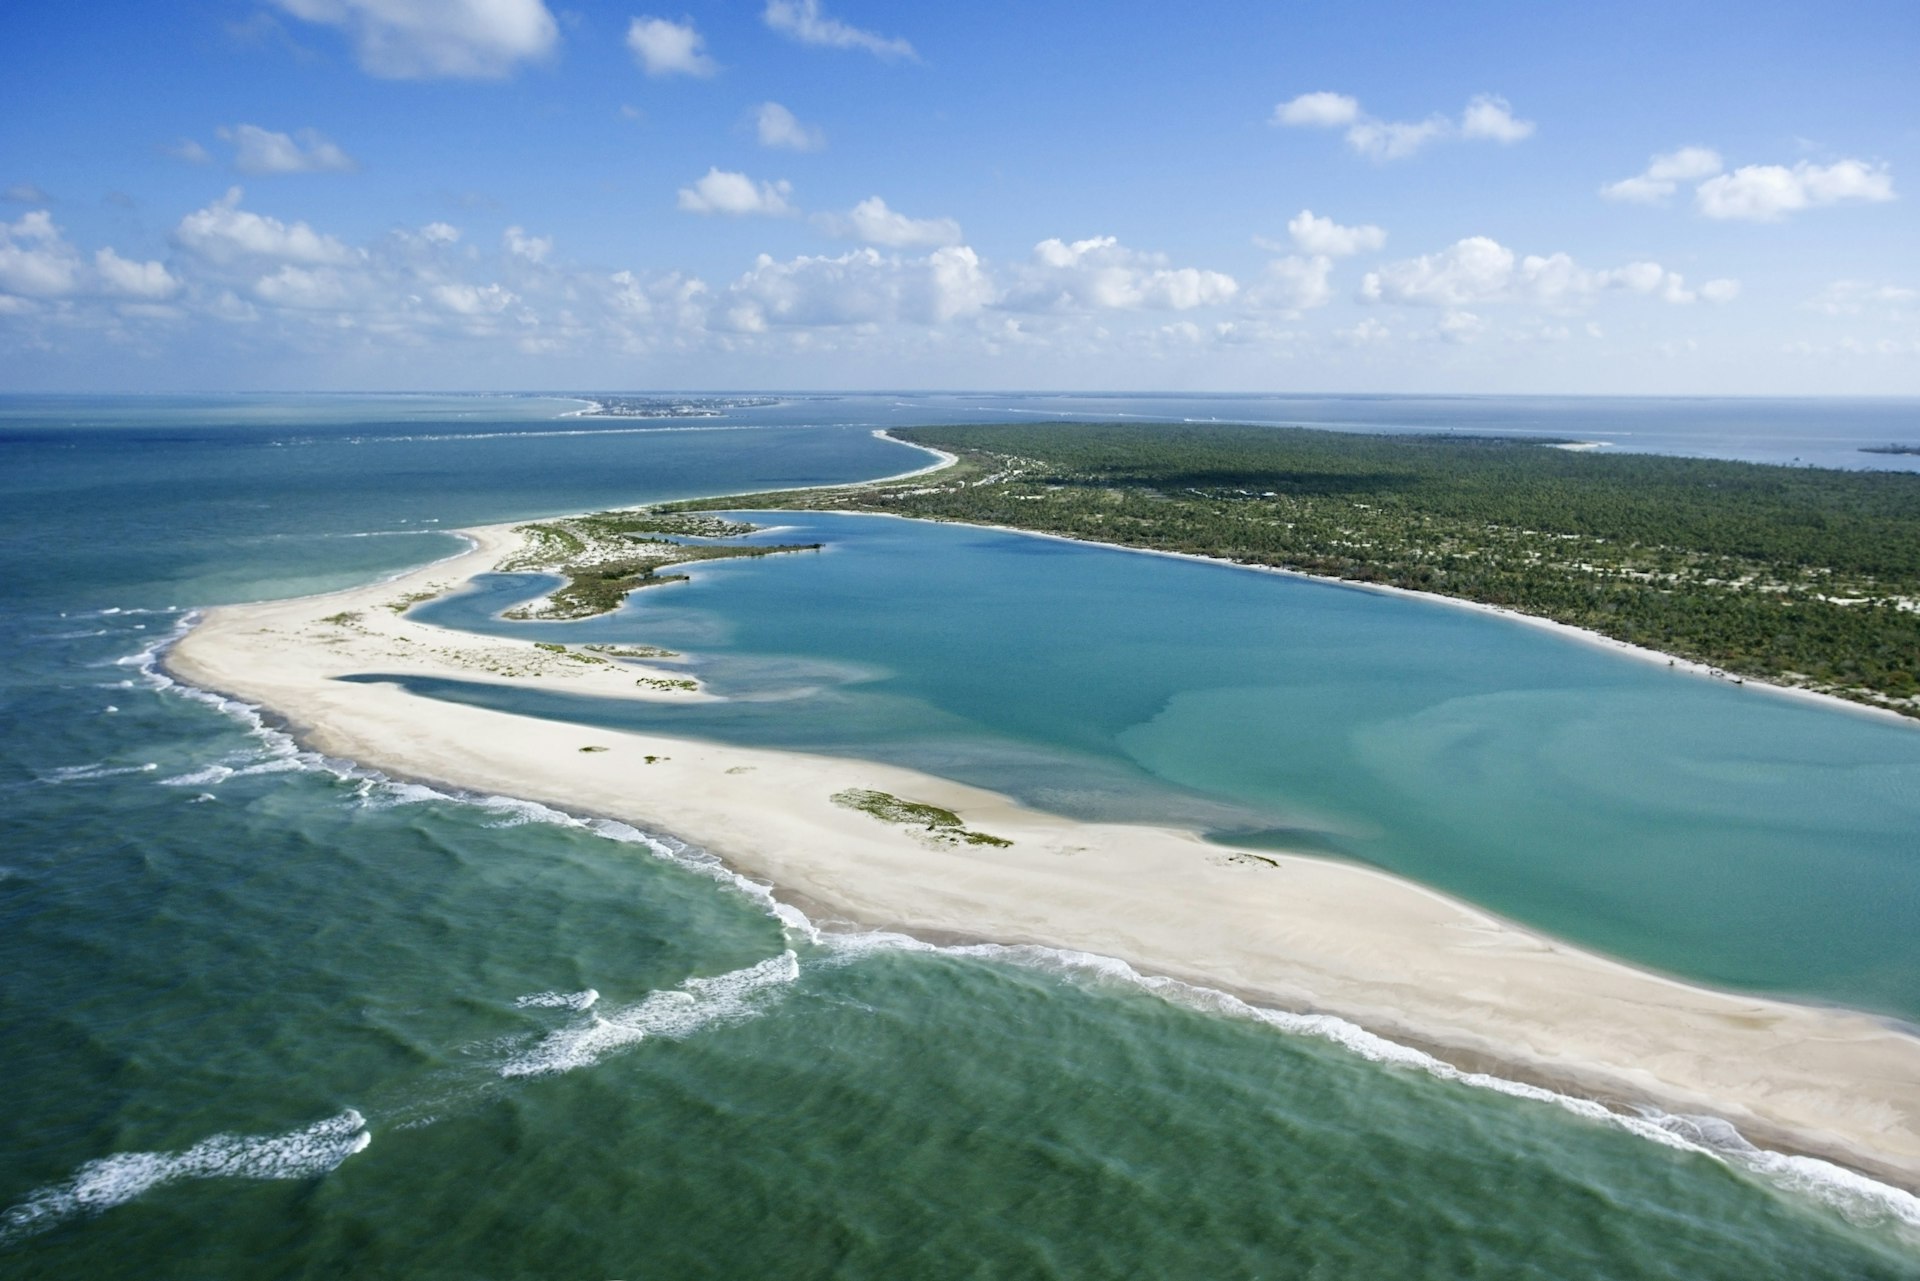 An aerial view of Cayo Costa Island's white-sand coastline